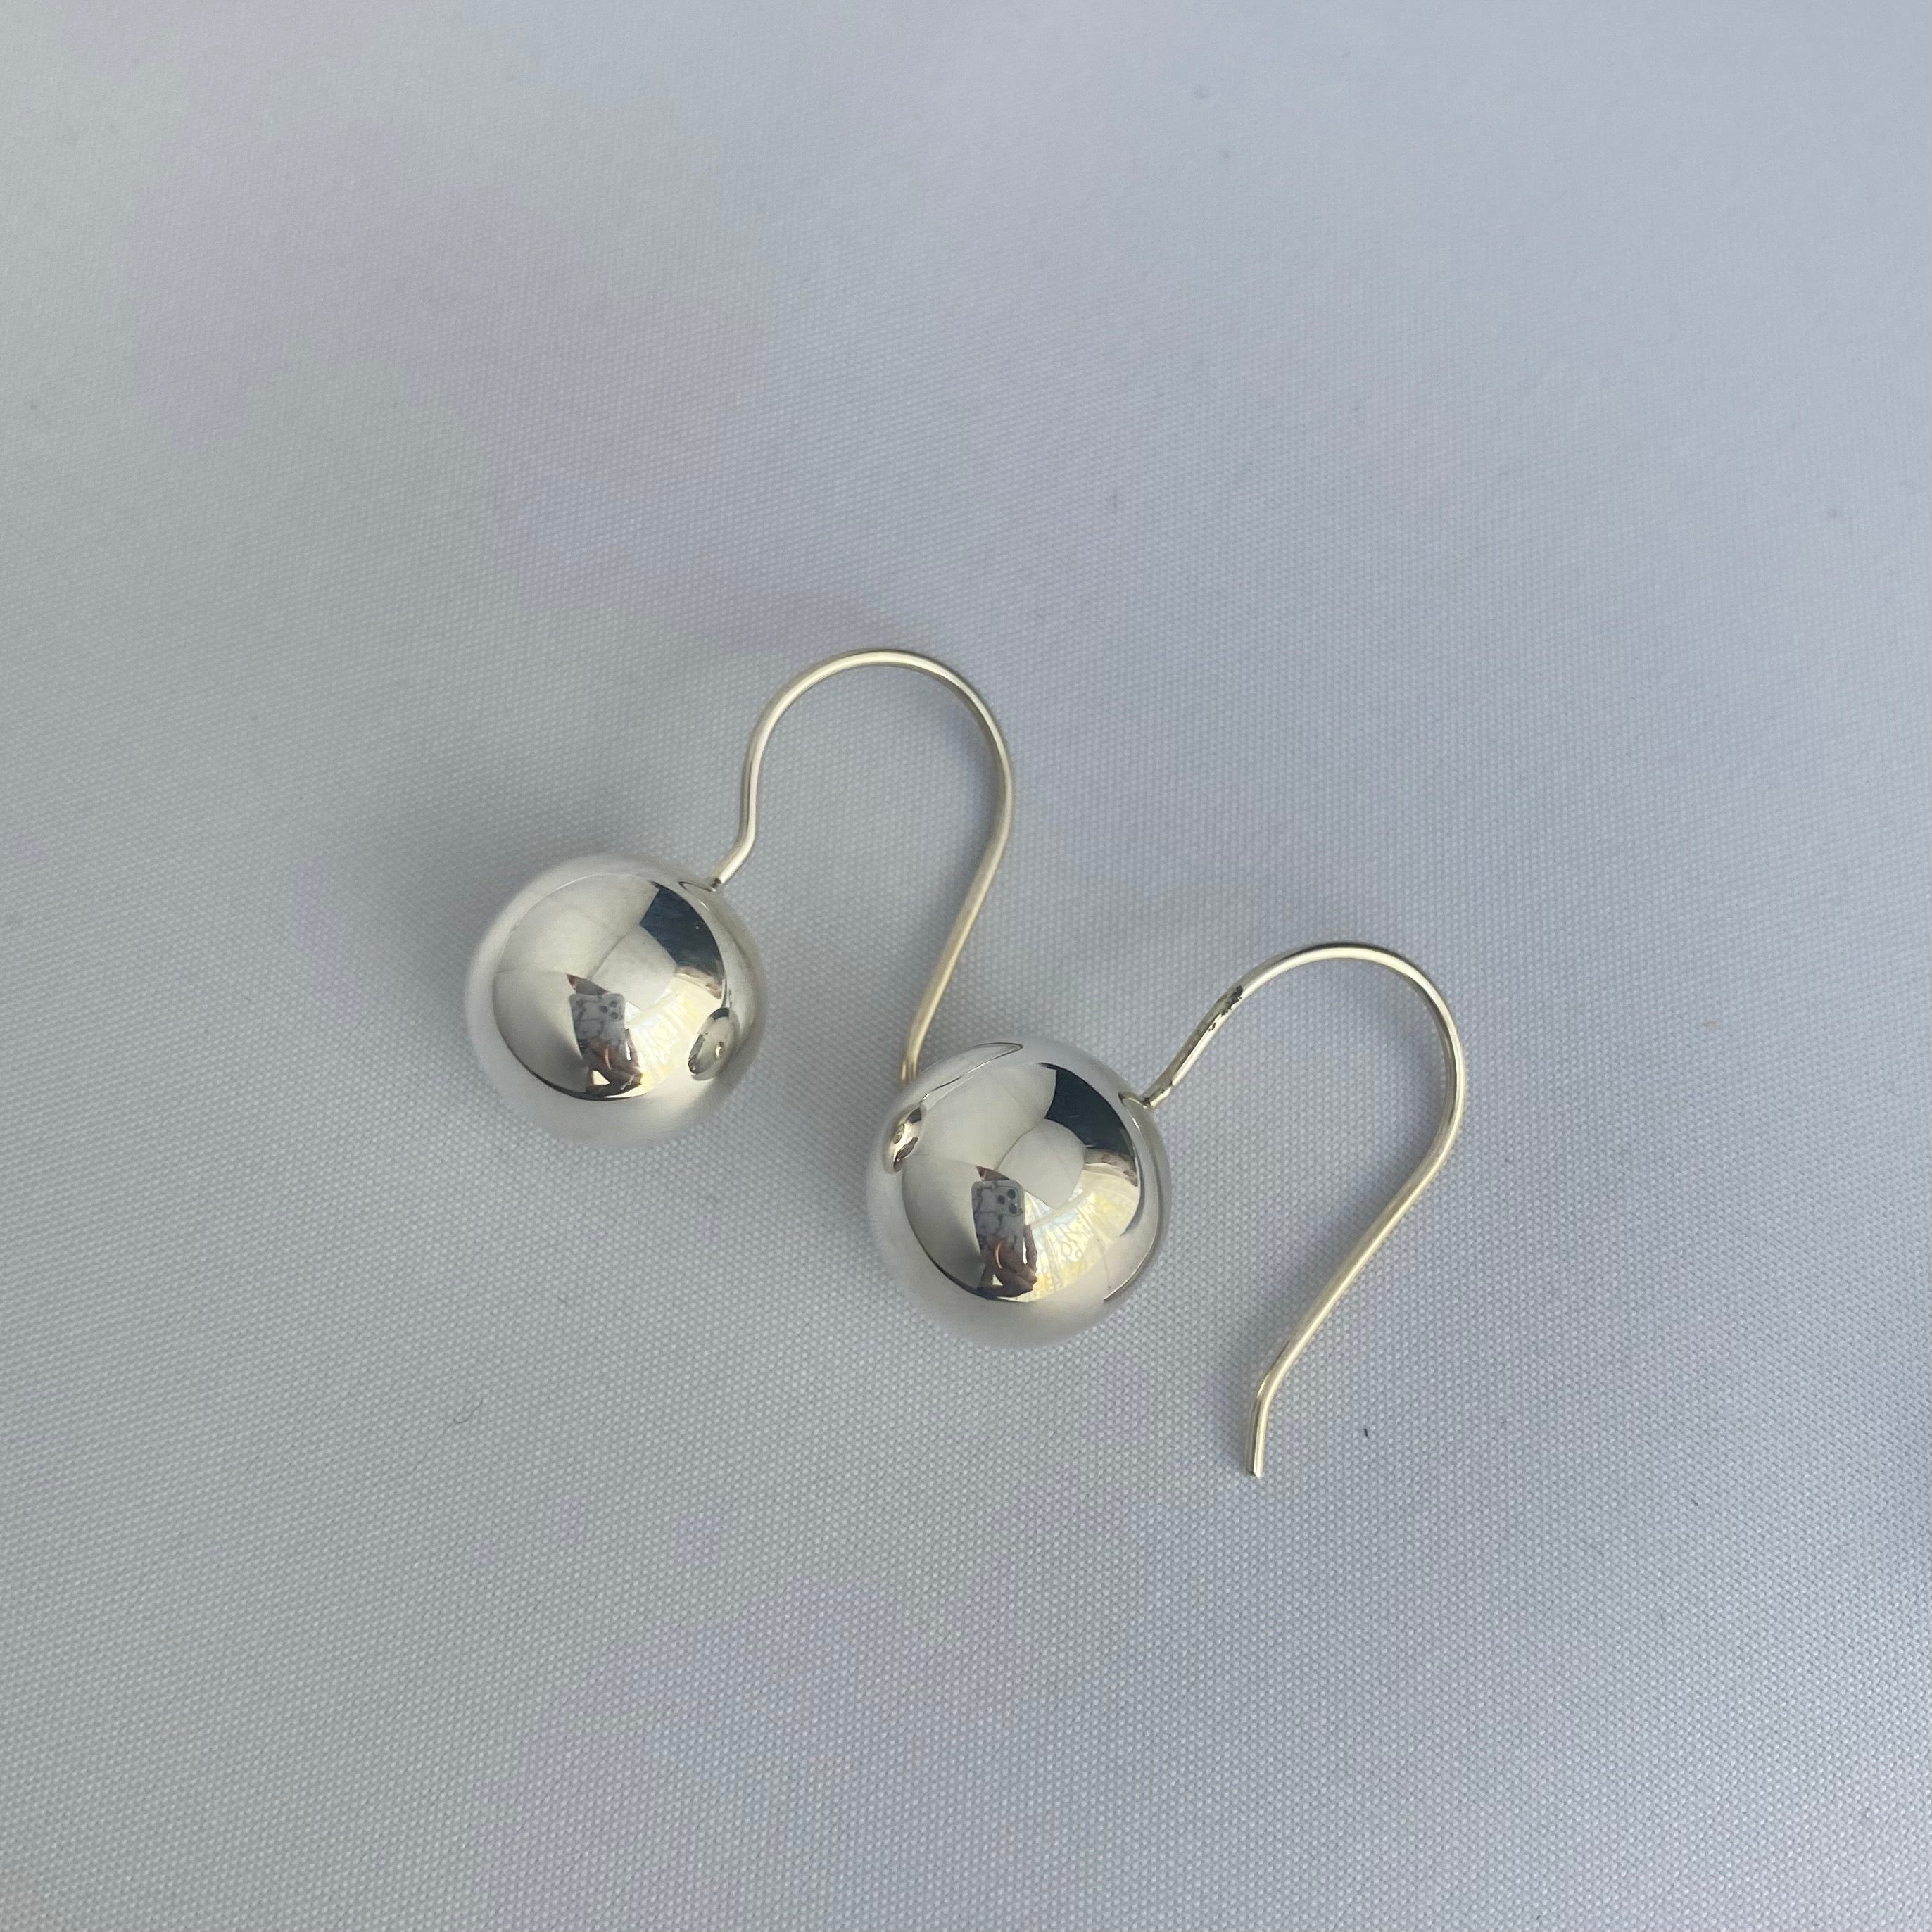 Silver Hook Earrings with Sphere Drop